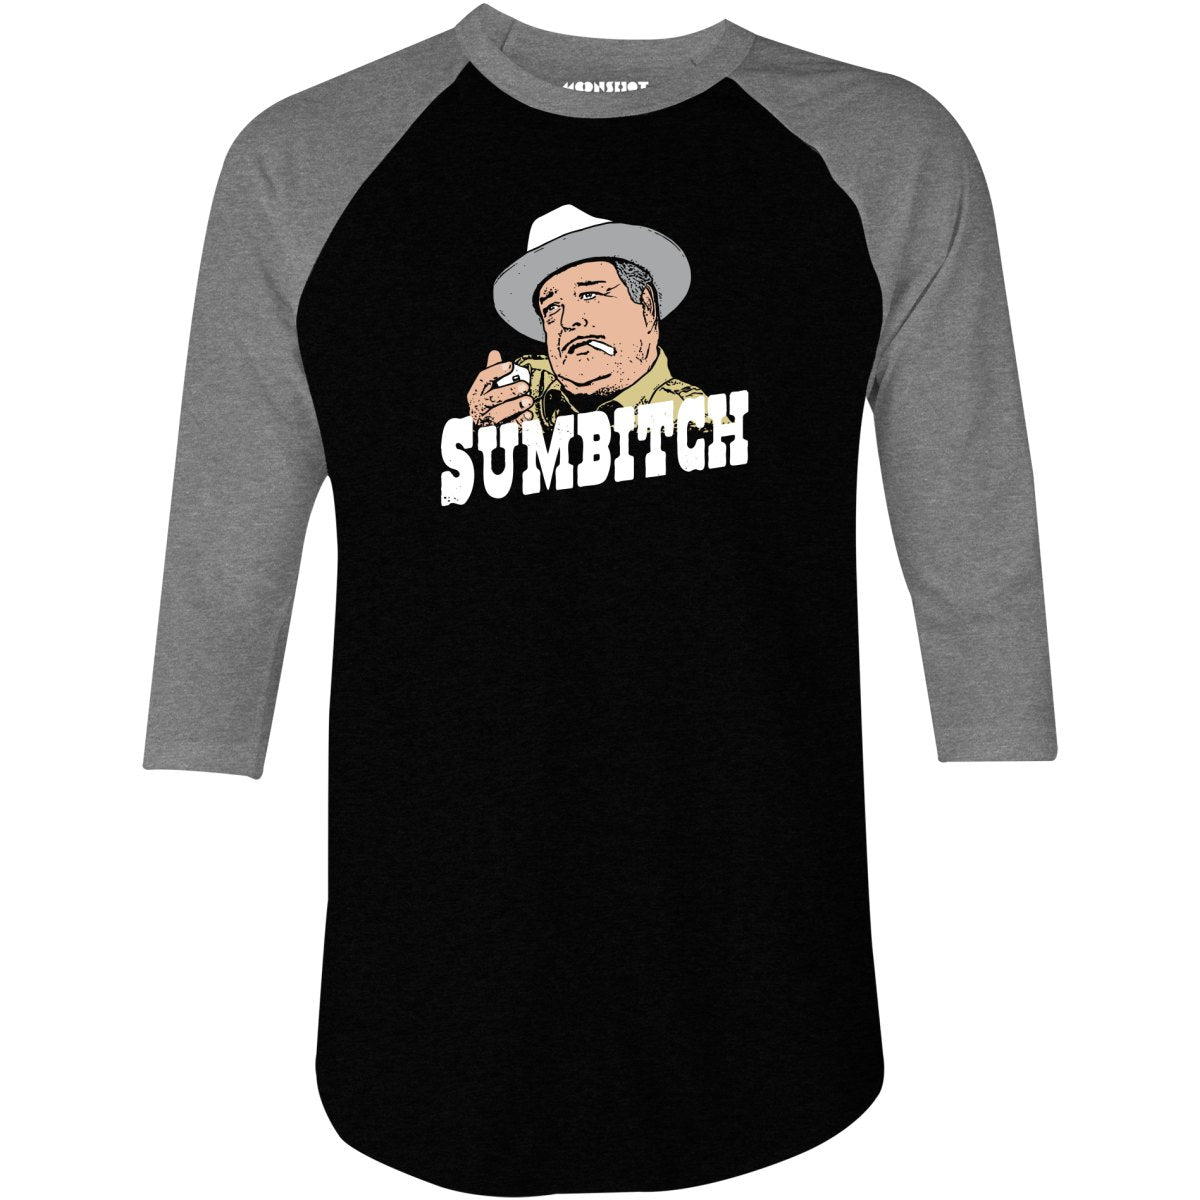 Sumbitch - 3/4 Sleeve Raglan T-Shirt